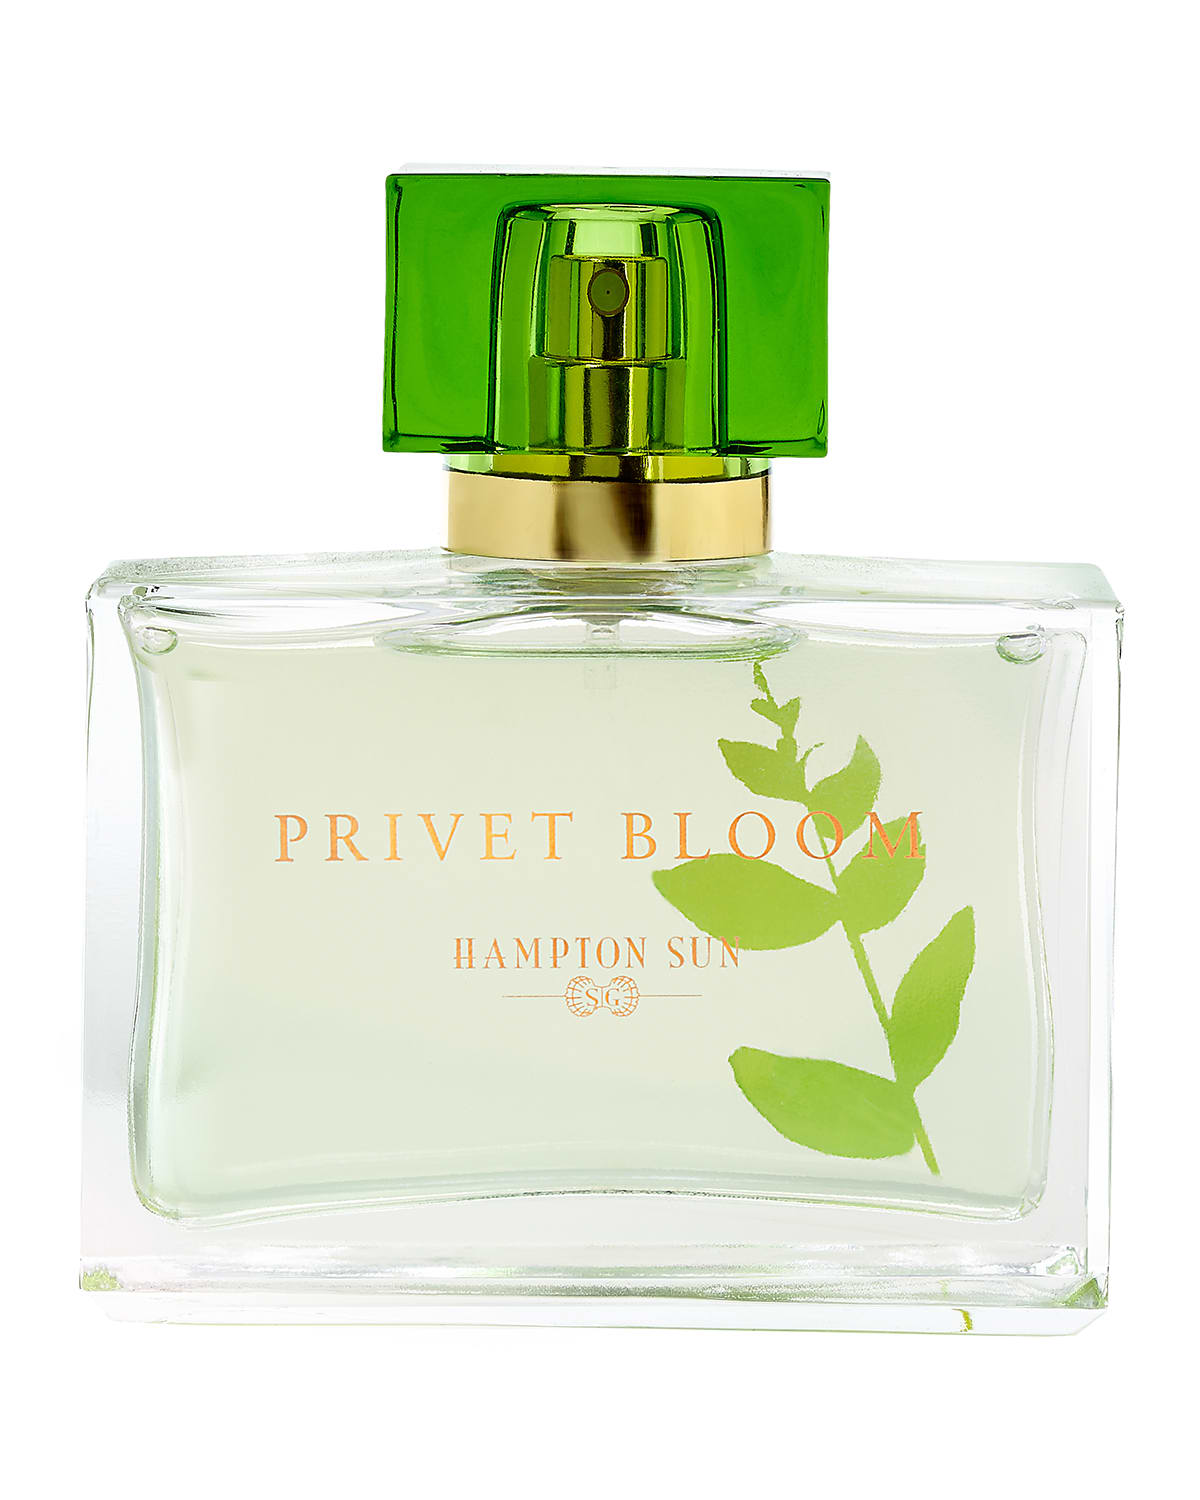 Hampton Sun Privet Bloom Eau de Parfum, 1.7 oz.